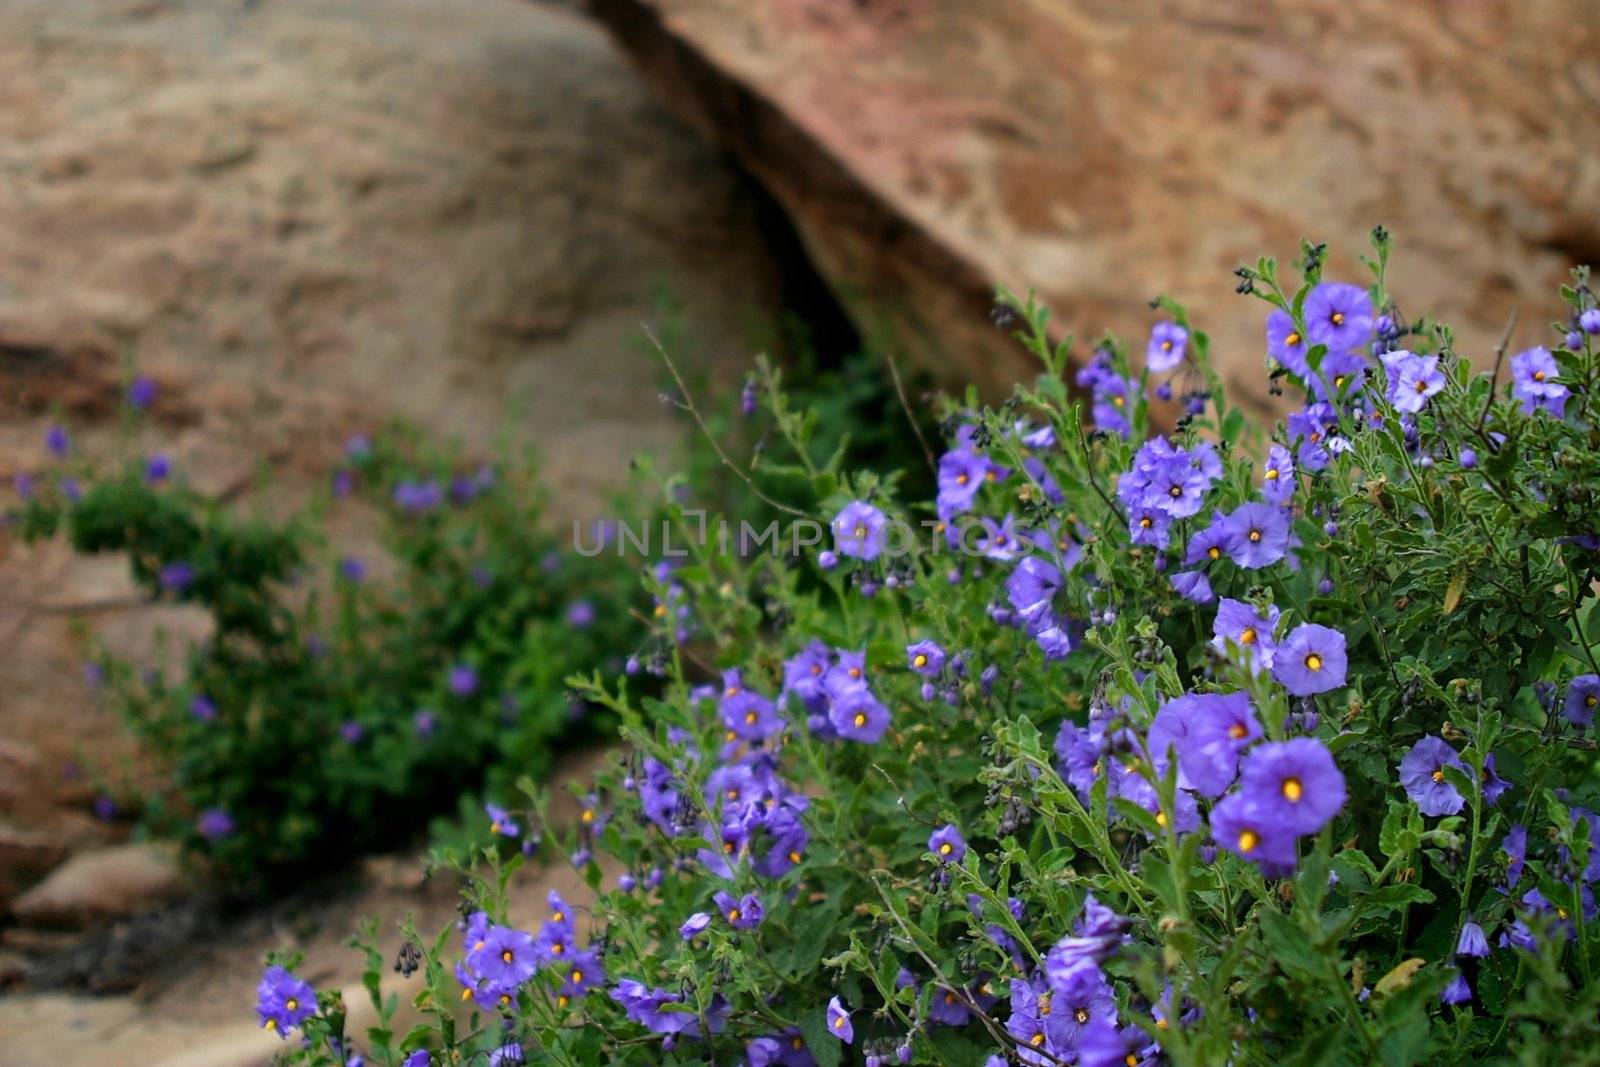 Wildflowers in the Santa Susana Mountains